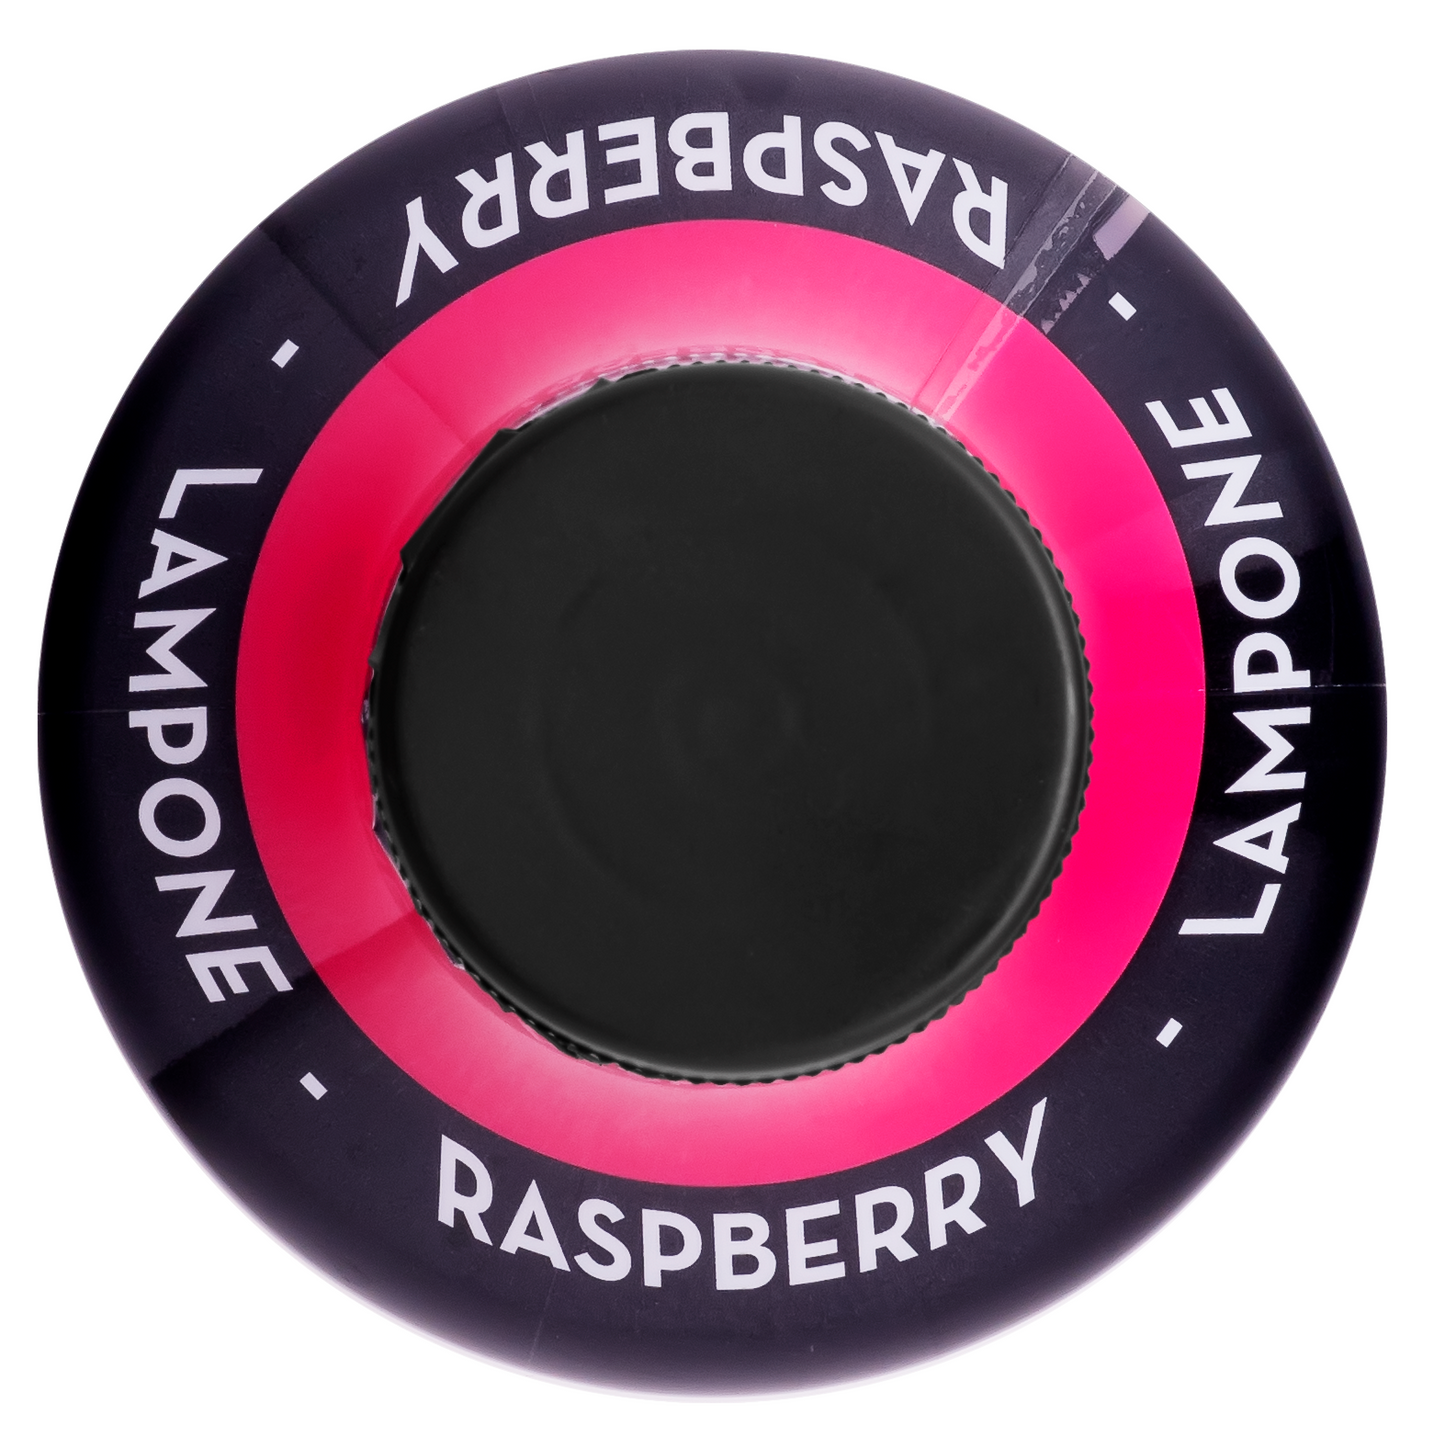 Raspberry pulp